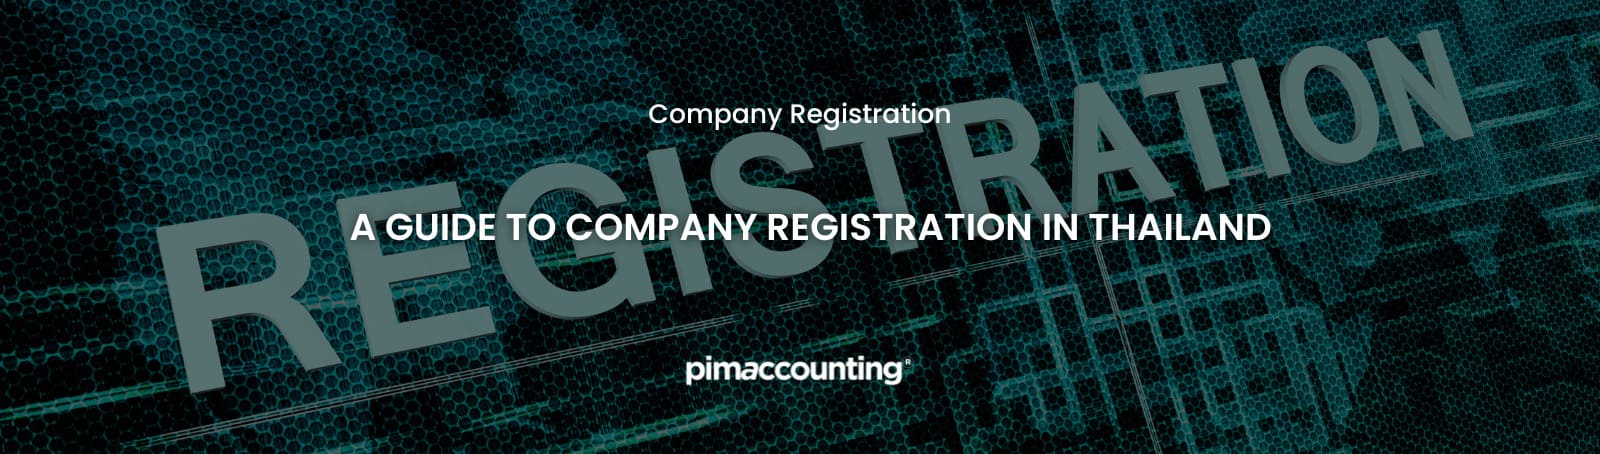 Company Registration - Pimaccounting